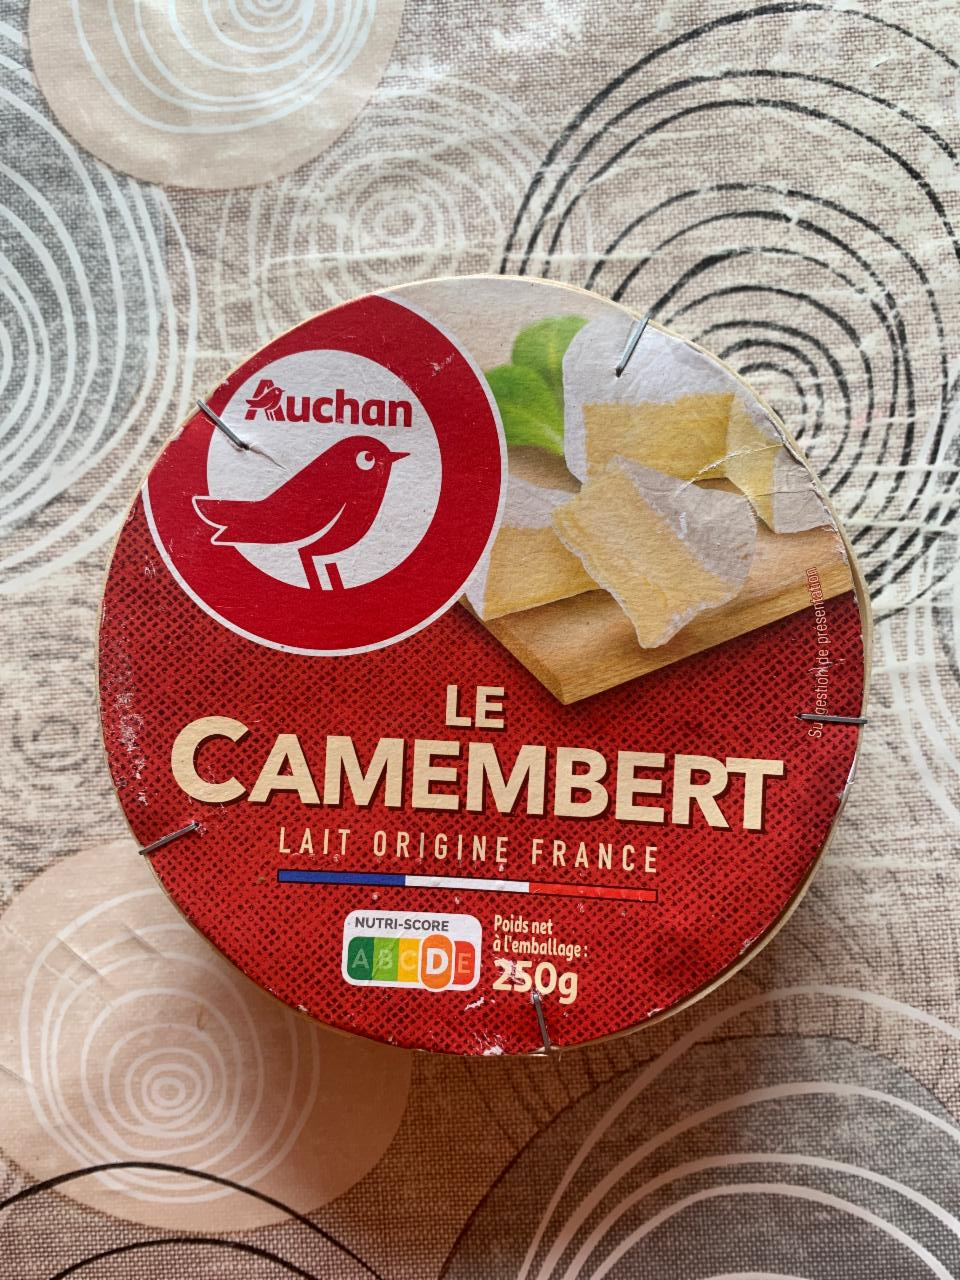 Фото - le camembert lair origine france Auchan